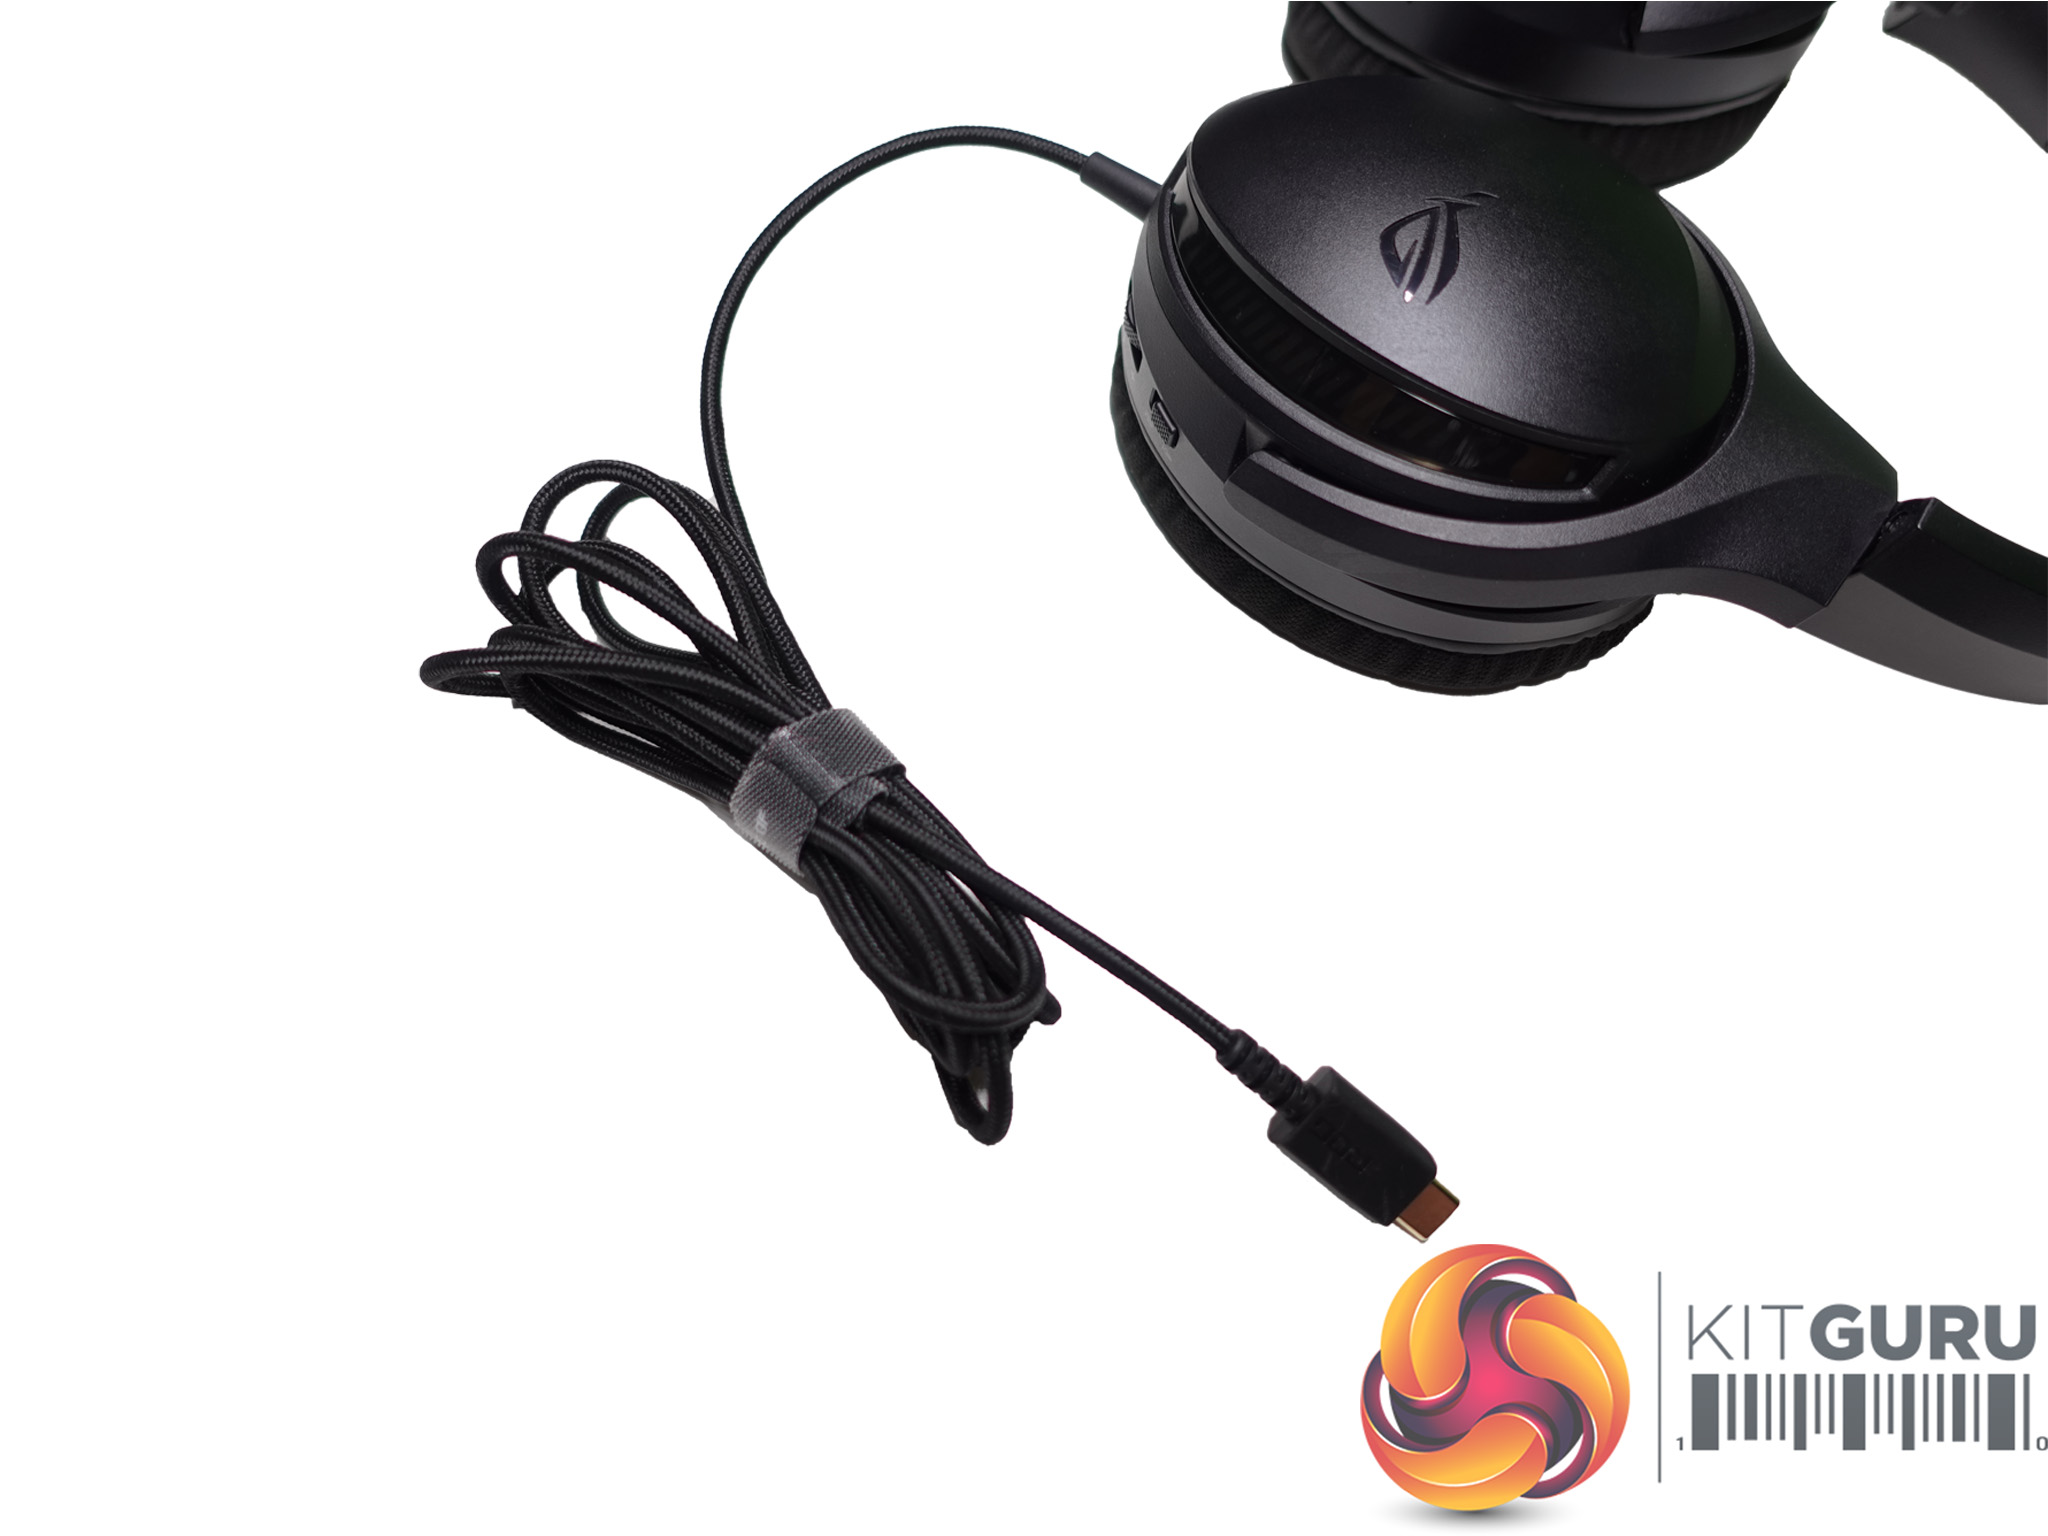 ASUS ROG Fusion | II Review 300 Headset KitGuru